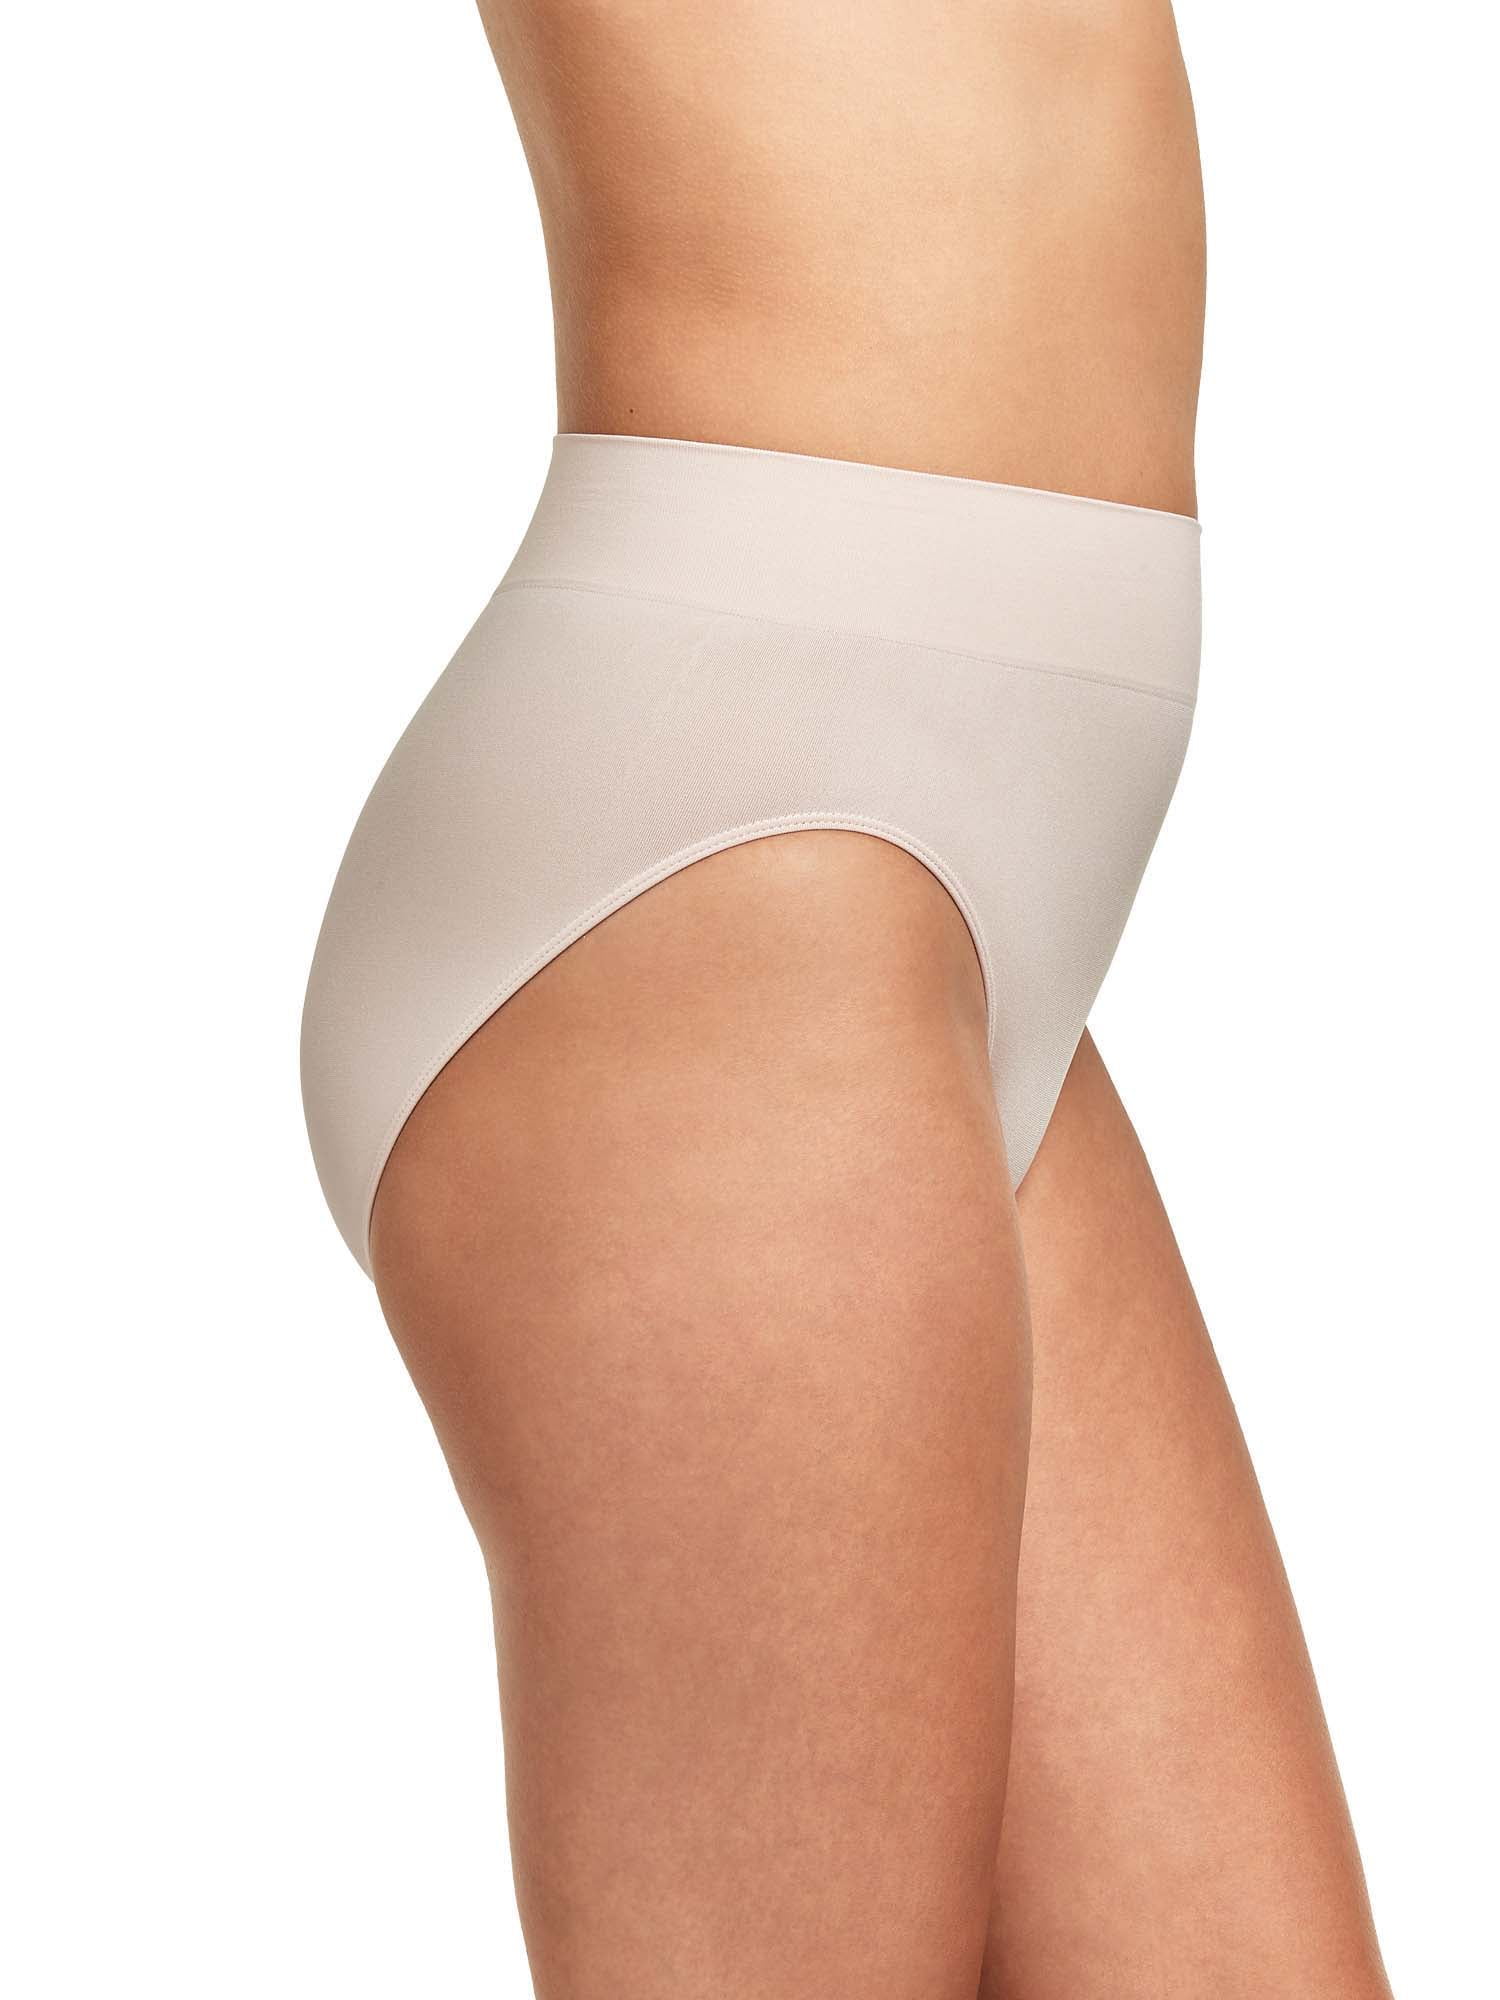 Hanes Women's Ultimate Seam Free Smoothing Hi-Cut Panty